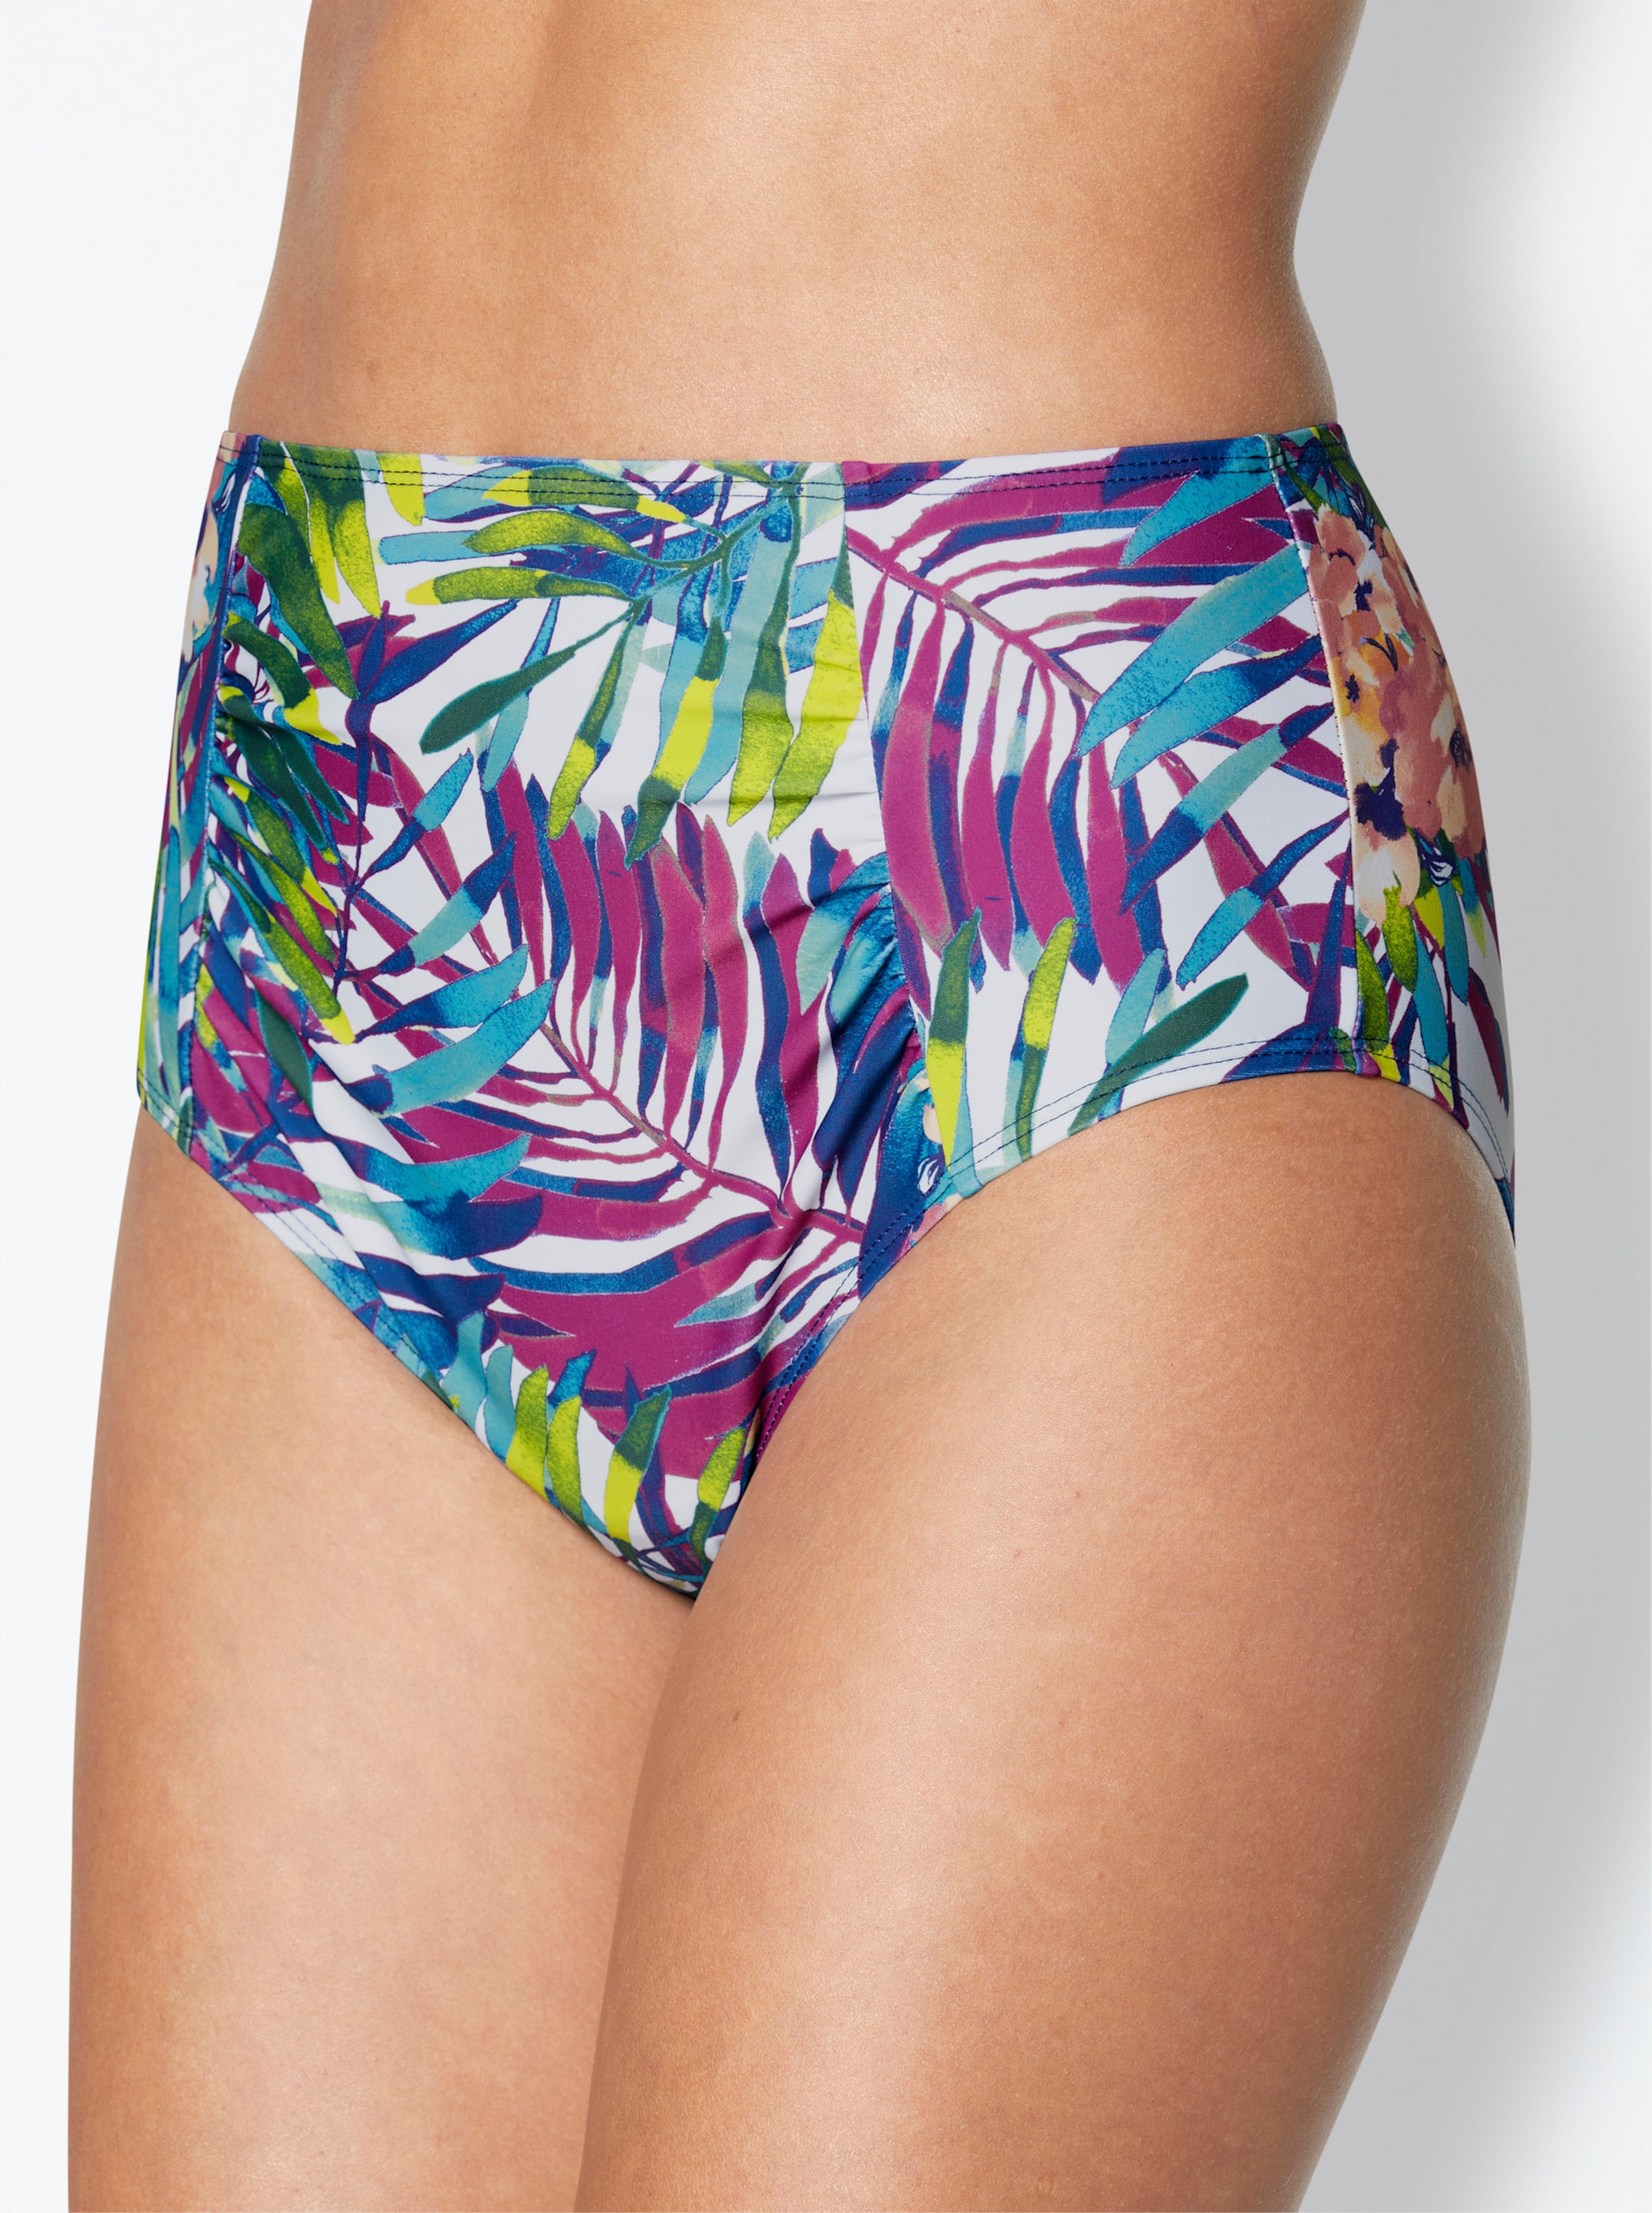 Cameosis/Feel günstig Kaufen-Bikini-Slip in lagune-gemustert von feel good. Bikini-Slip in lagune-gemustert von feel good <![CDATA[Bikini-Slip mit Raffung.]]>. 